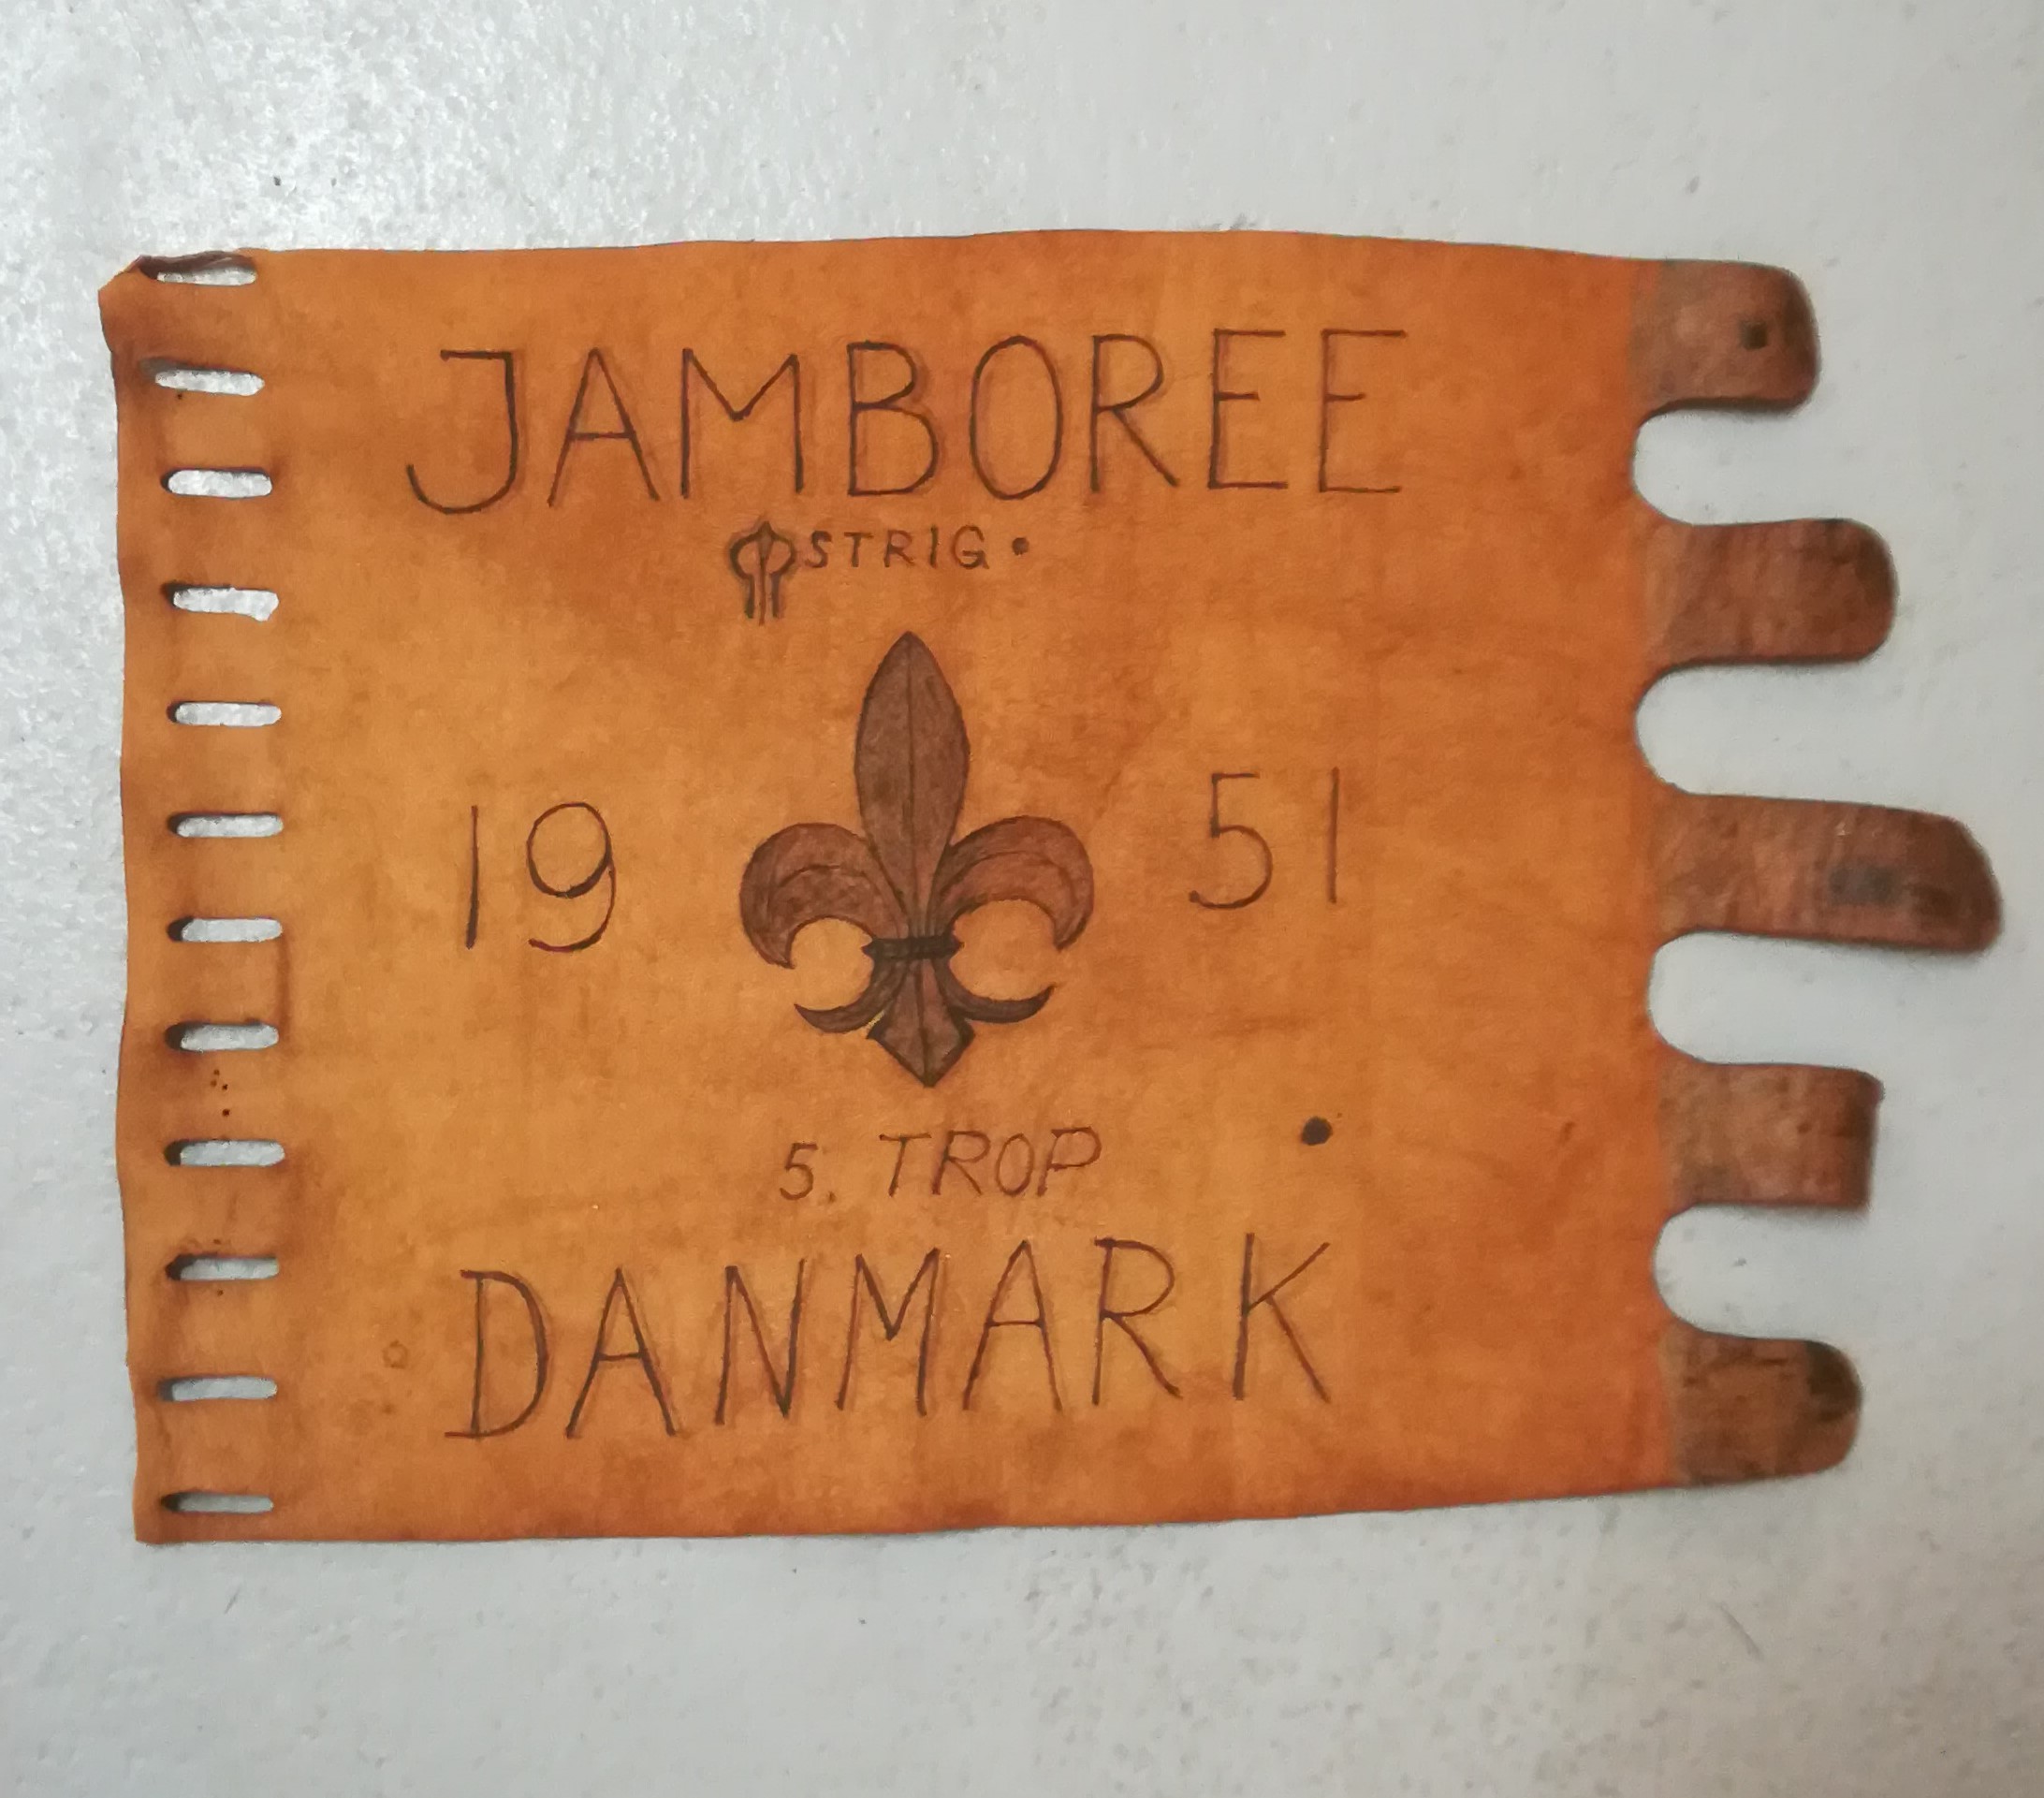 1951 world jamboree trop 2